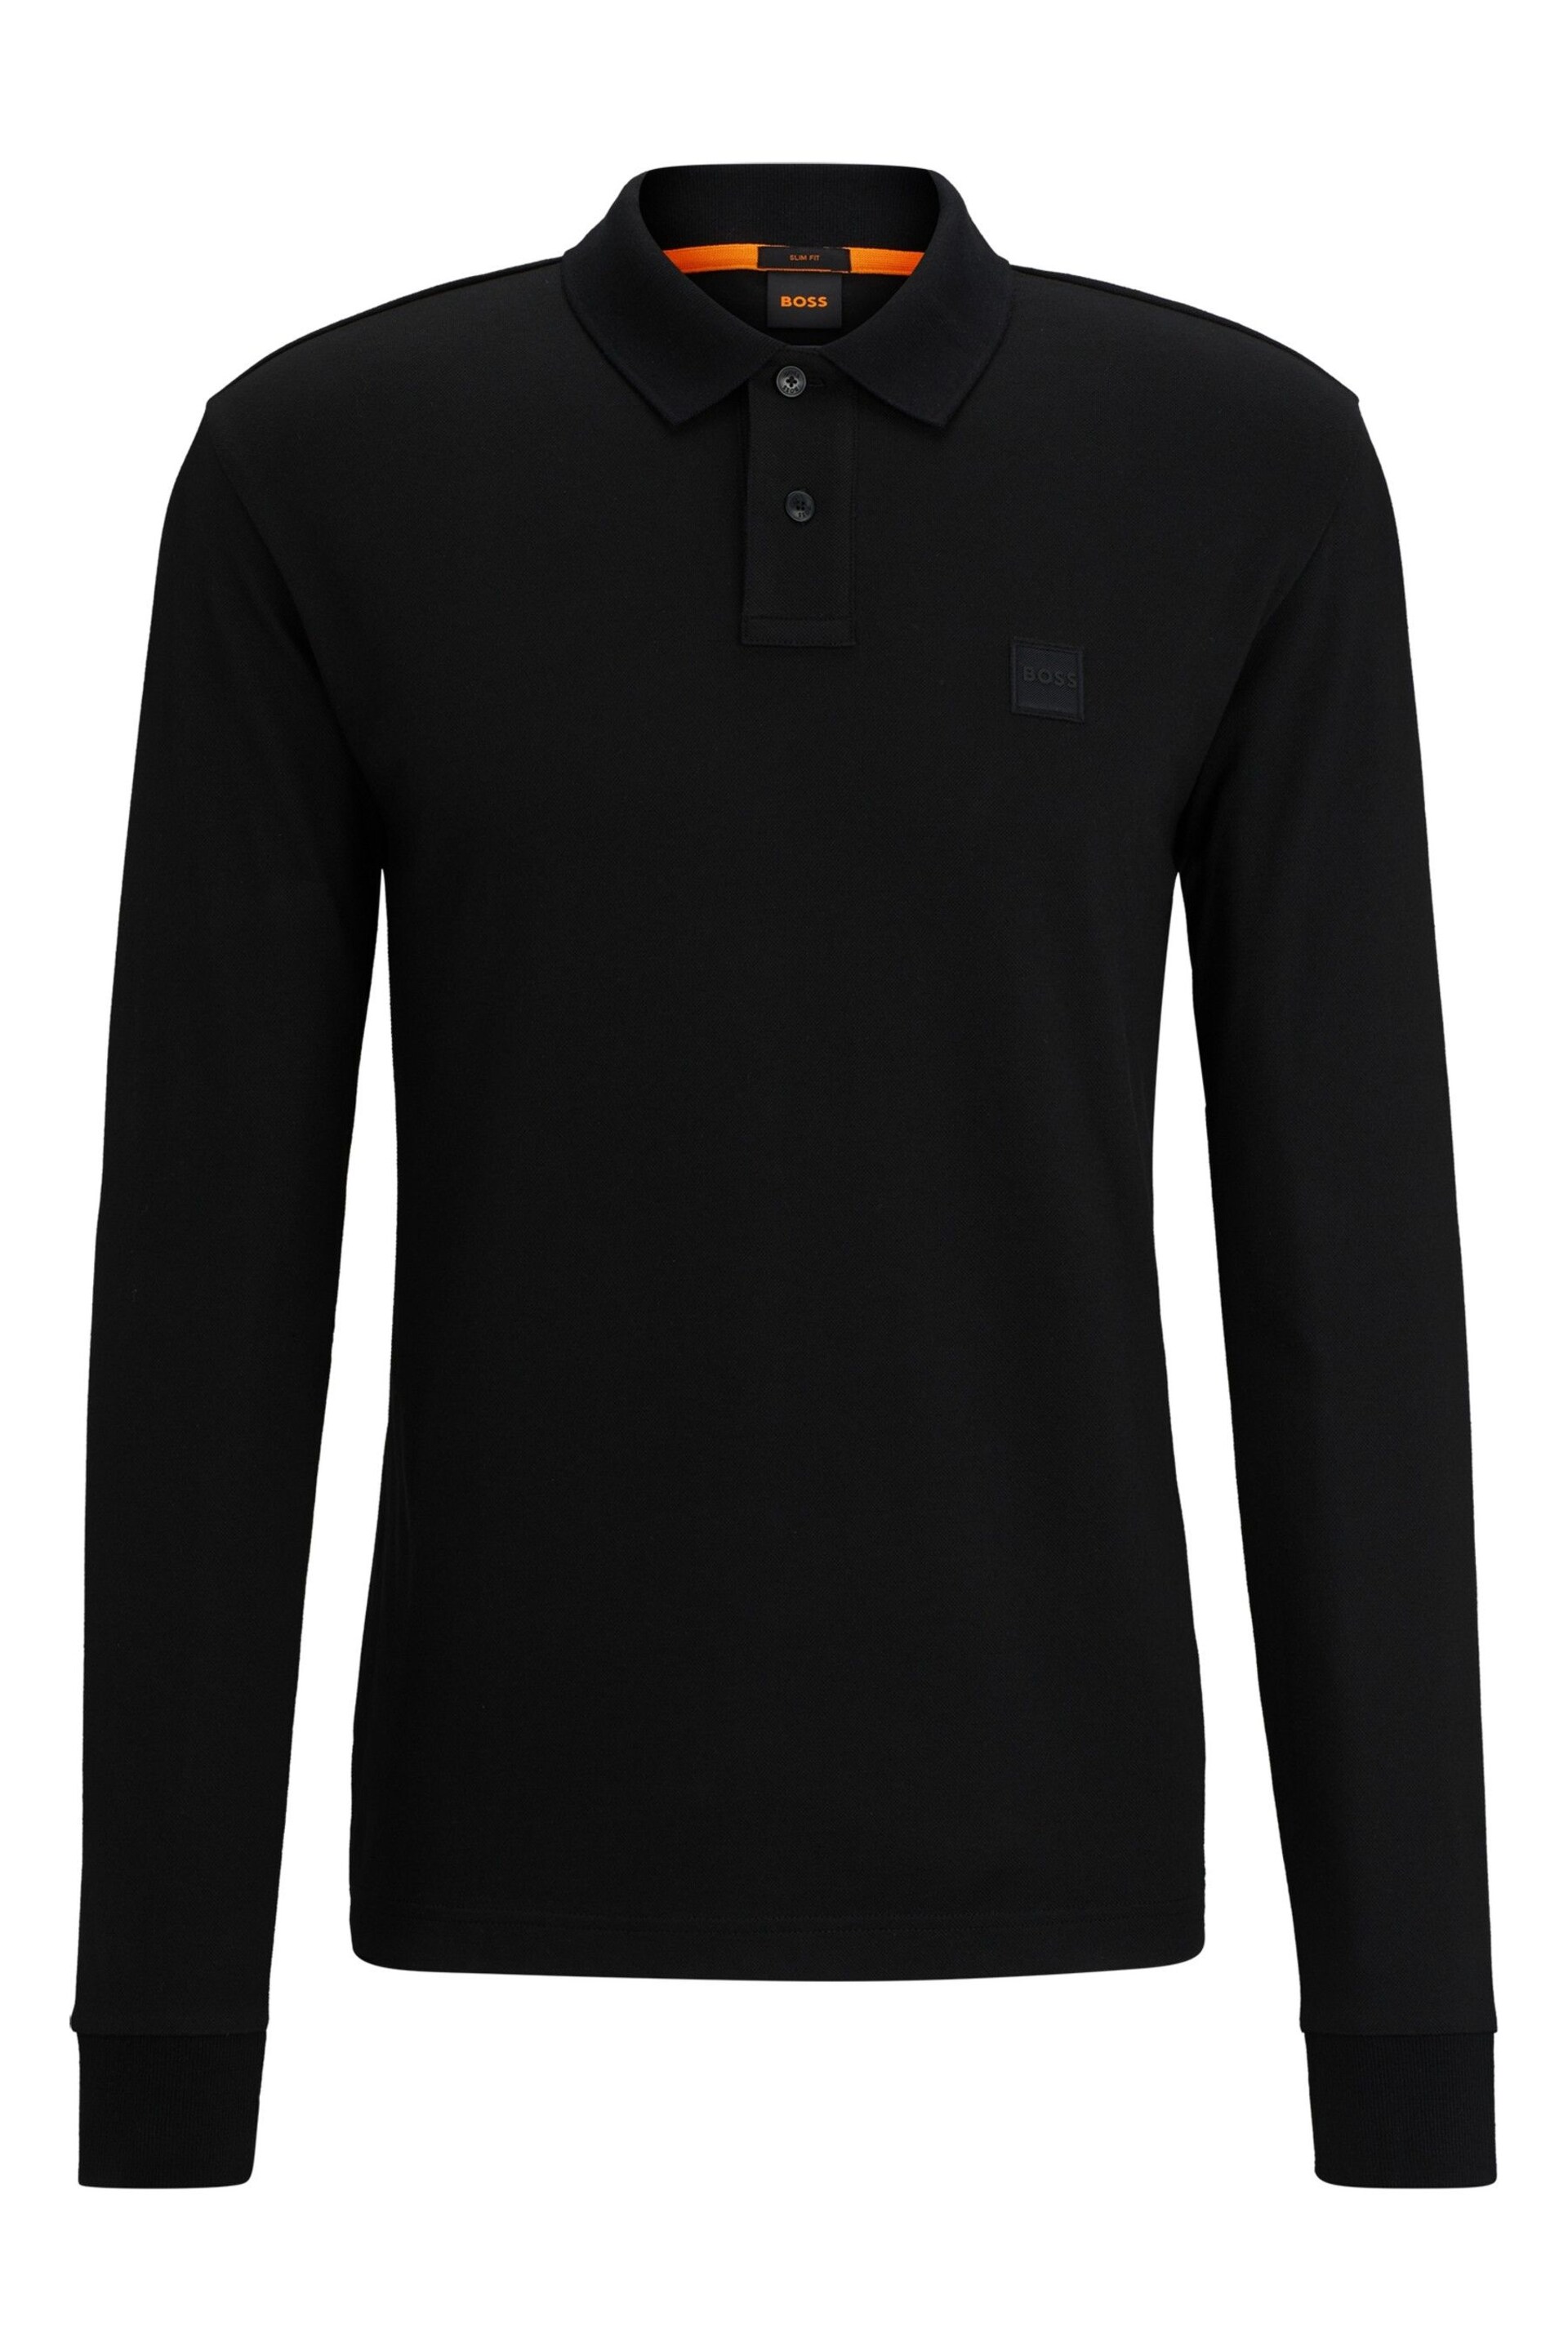 BOSS Black Logo Patch Long Sleeve Polo Shirt - Image 5 of 5